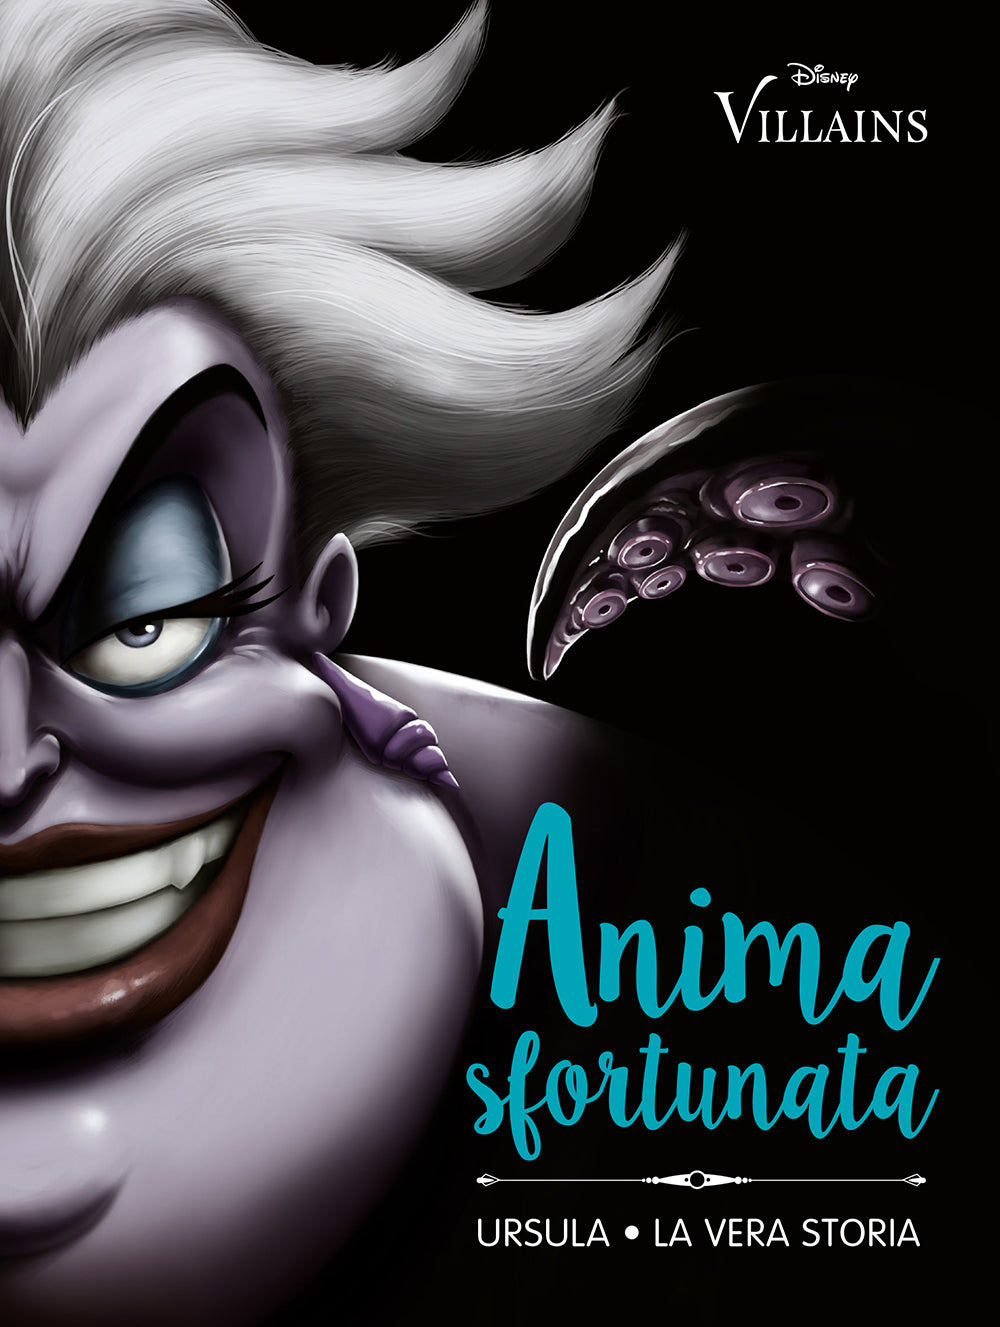 Anima sfortunata - Ursula La vera storia - Disney Villains